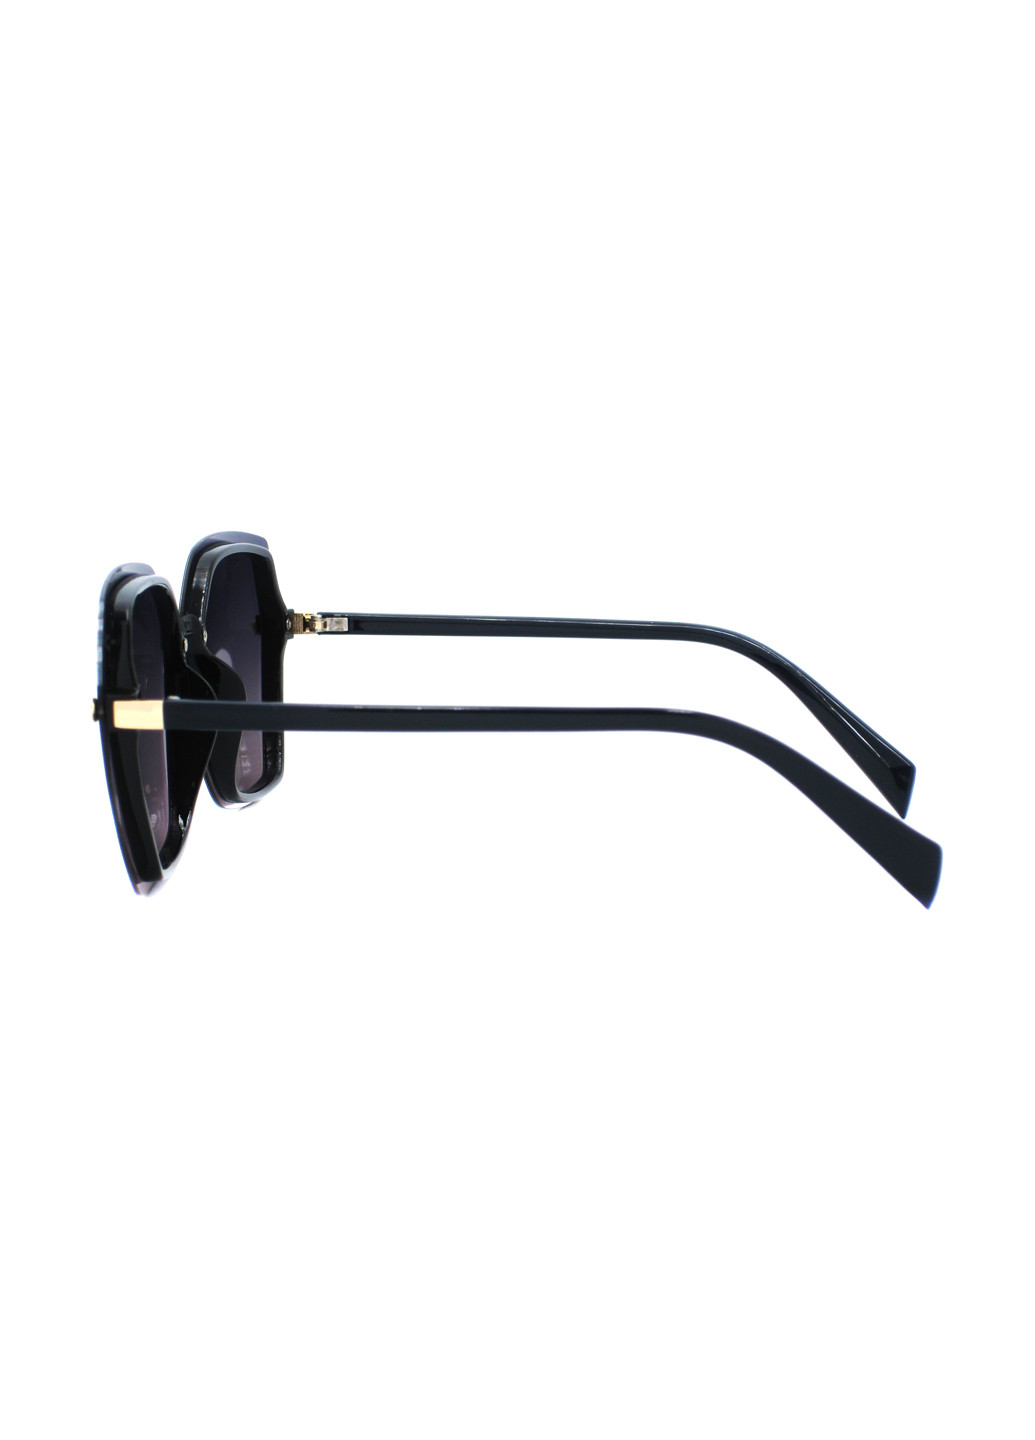 Cолнцезащитные очки Boccaccio bcp9956 04 (188291463)